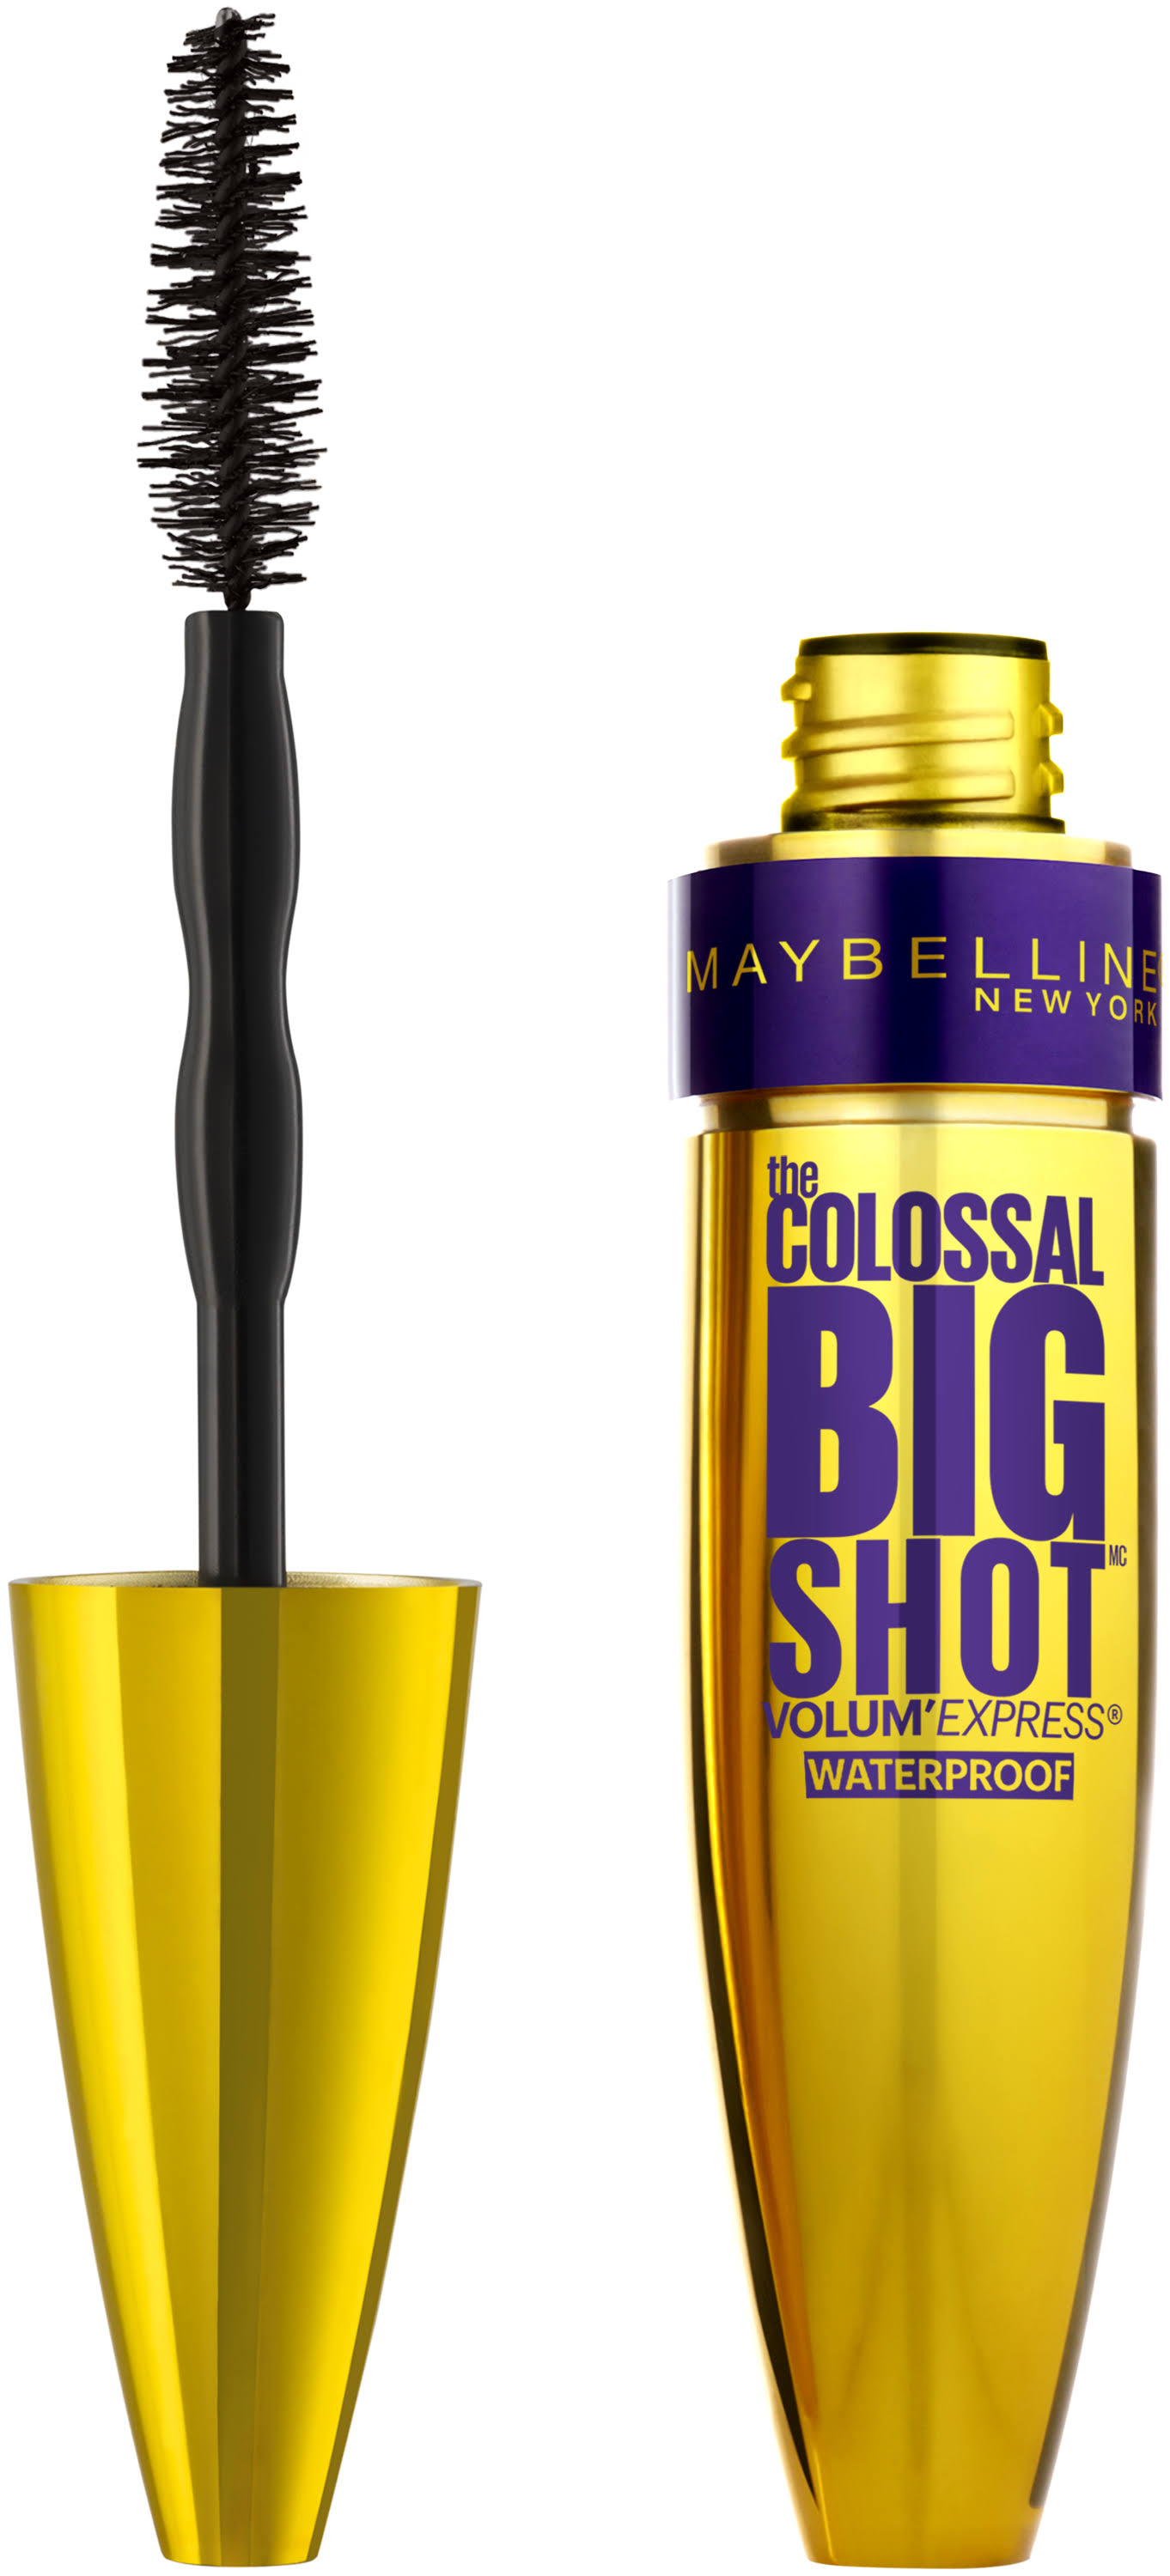 Maybelline Volum' Express The Colossal Big Shot Waterproof Mascara - Very Black, 0.33oz